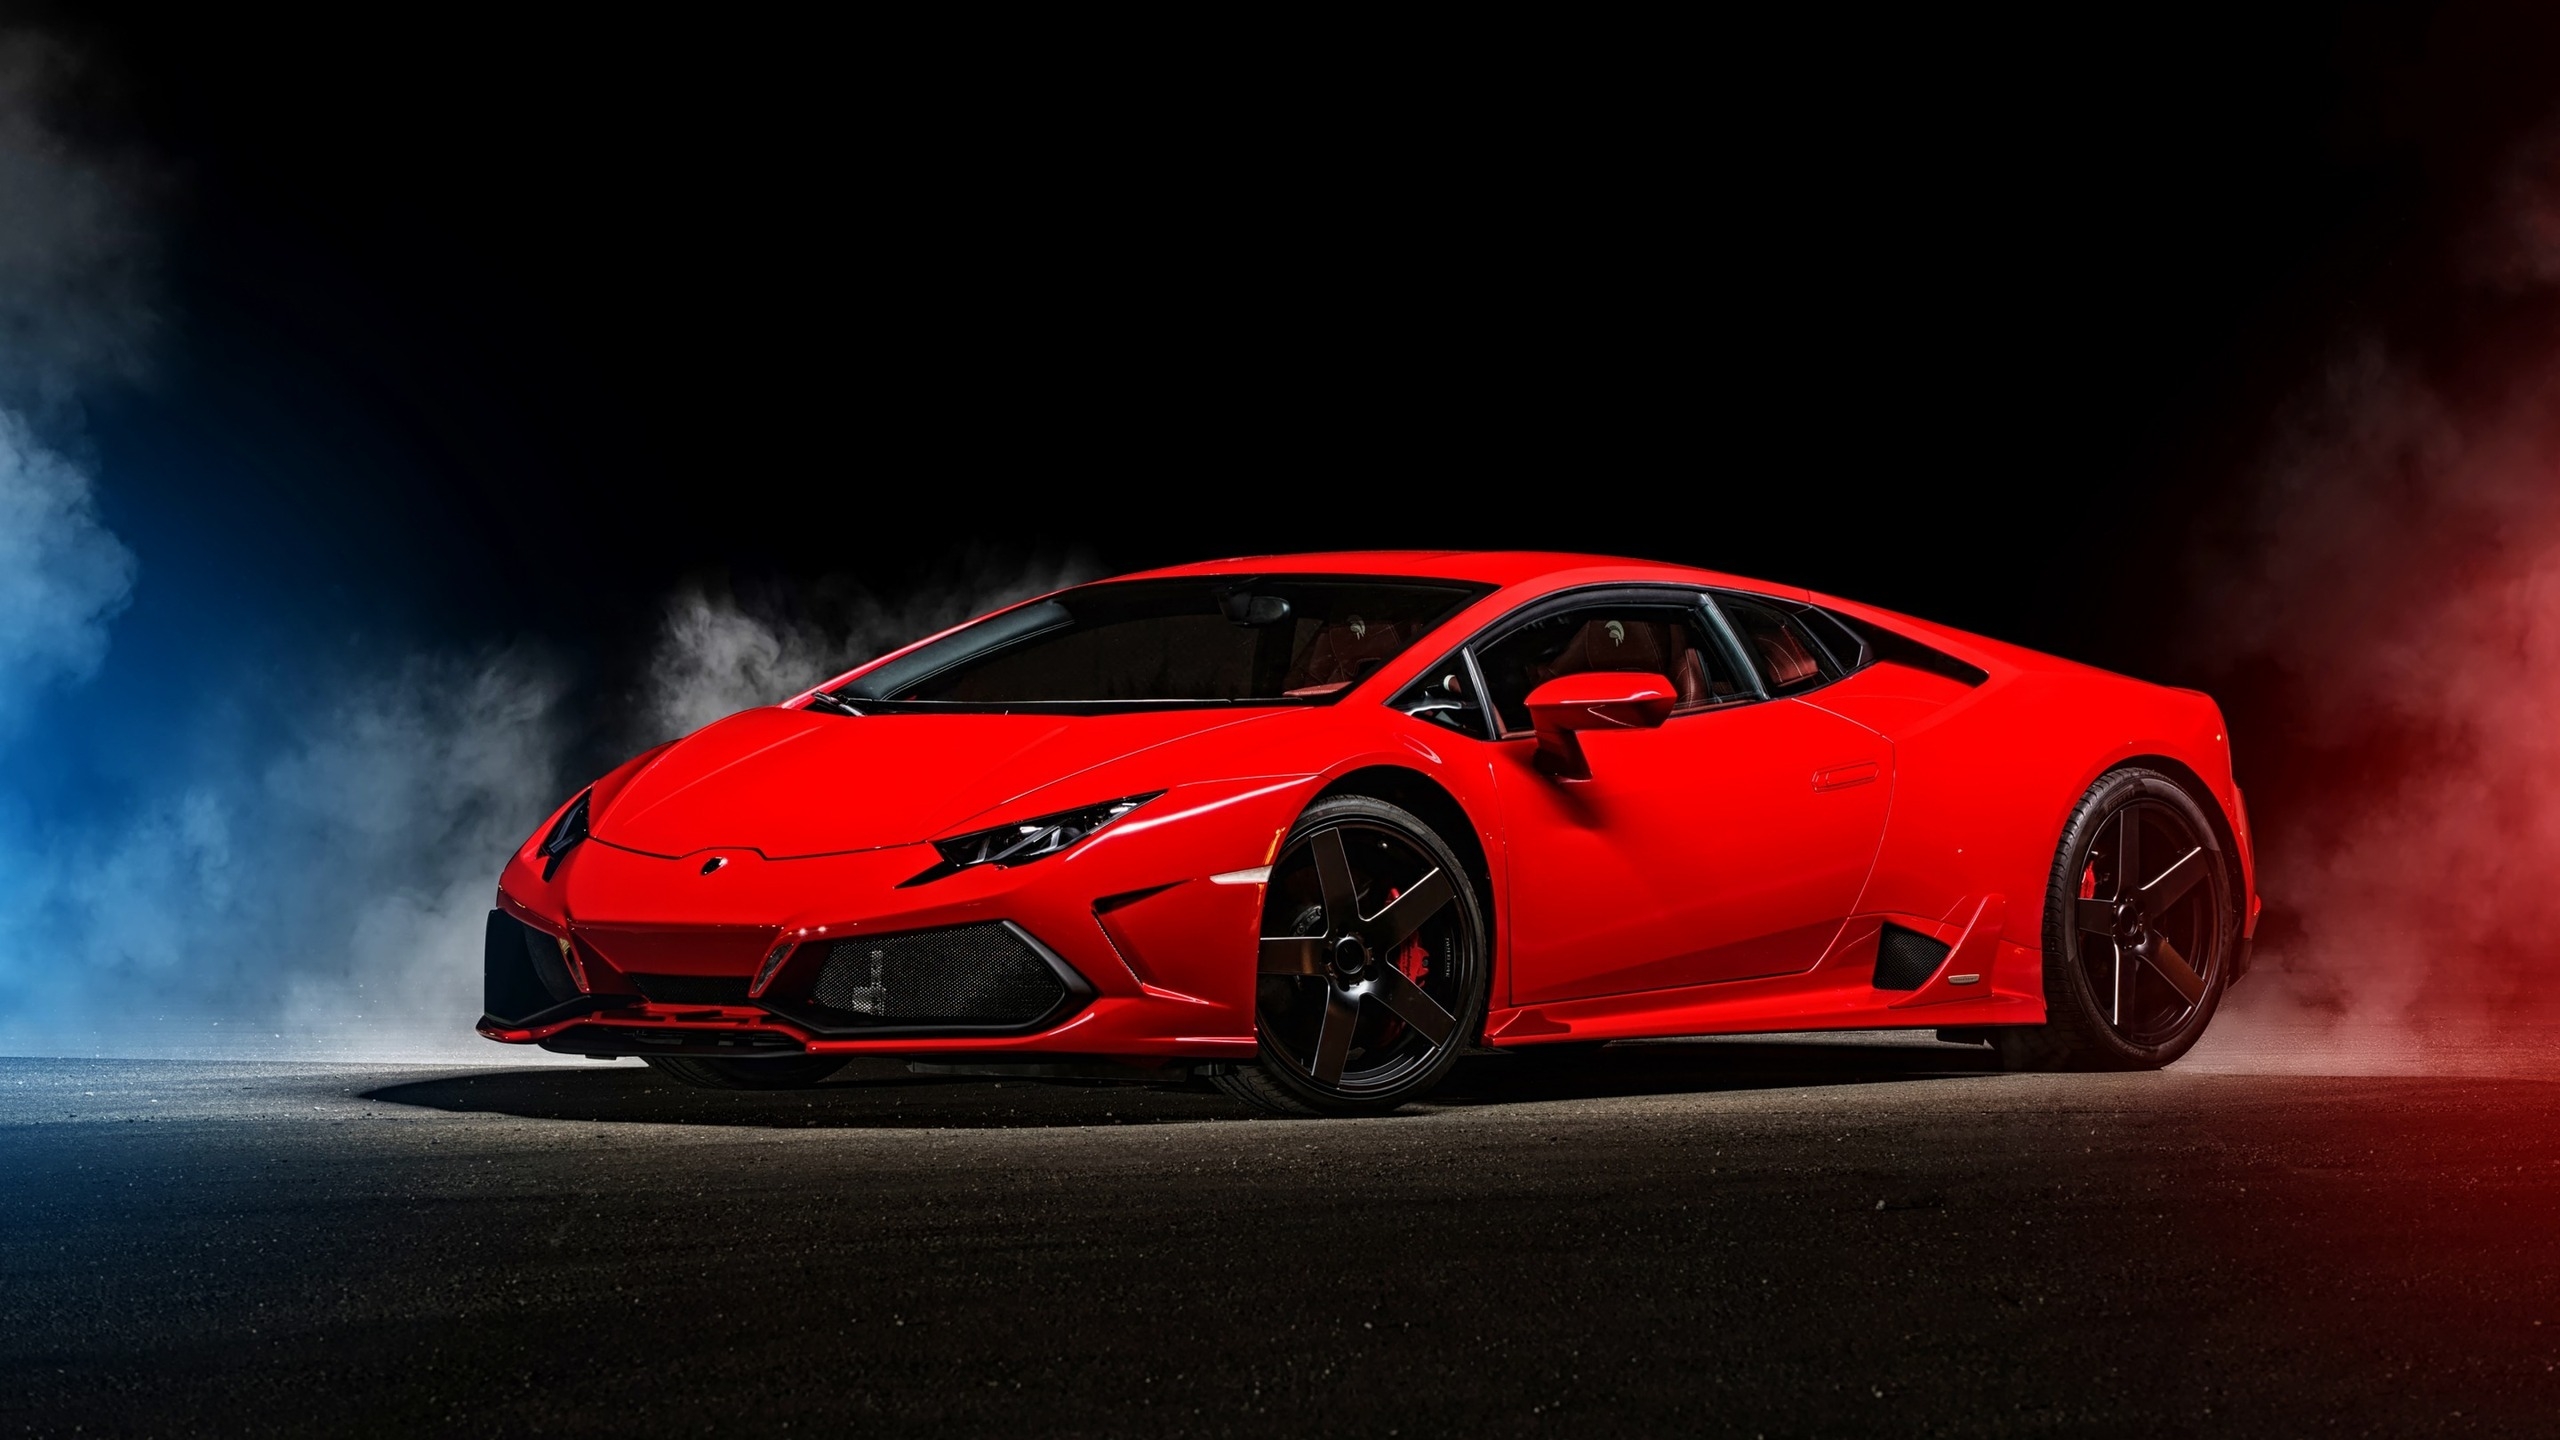 2015 Red Lamborghini Huracan for 2560x1440 HDTV resolution